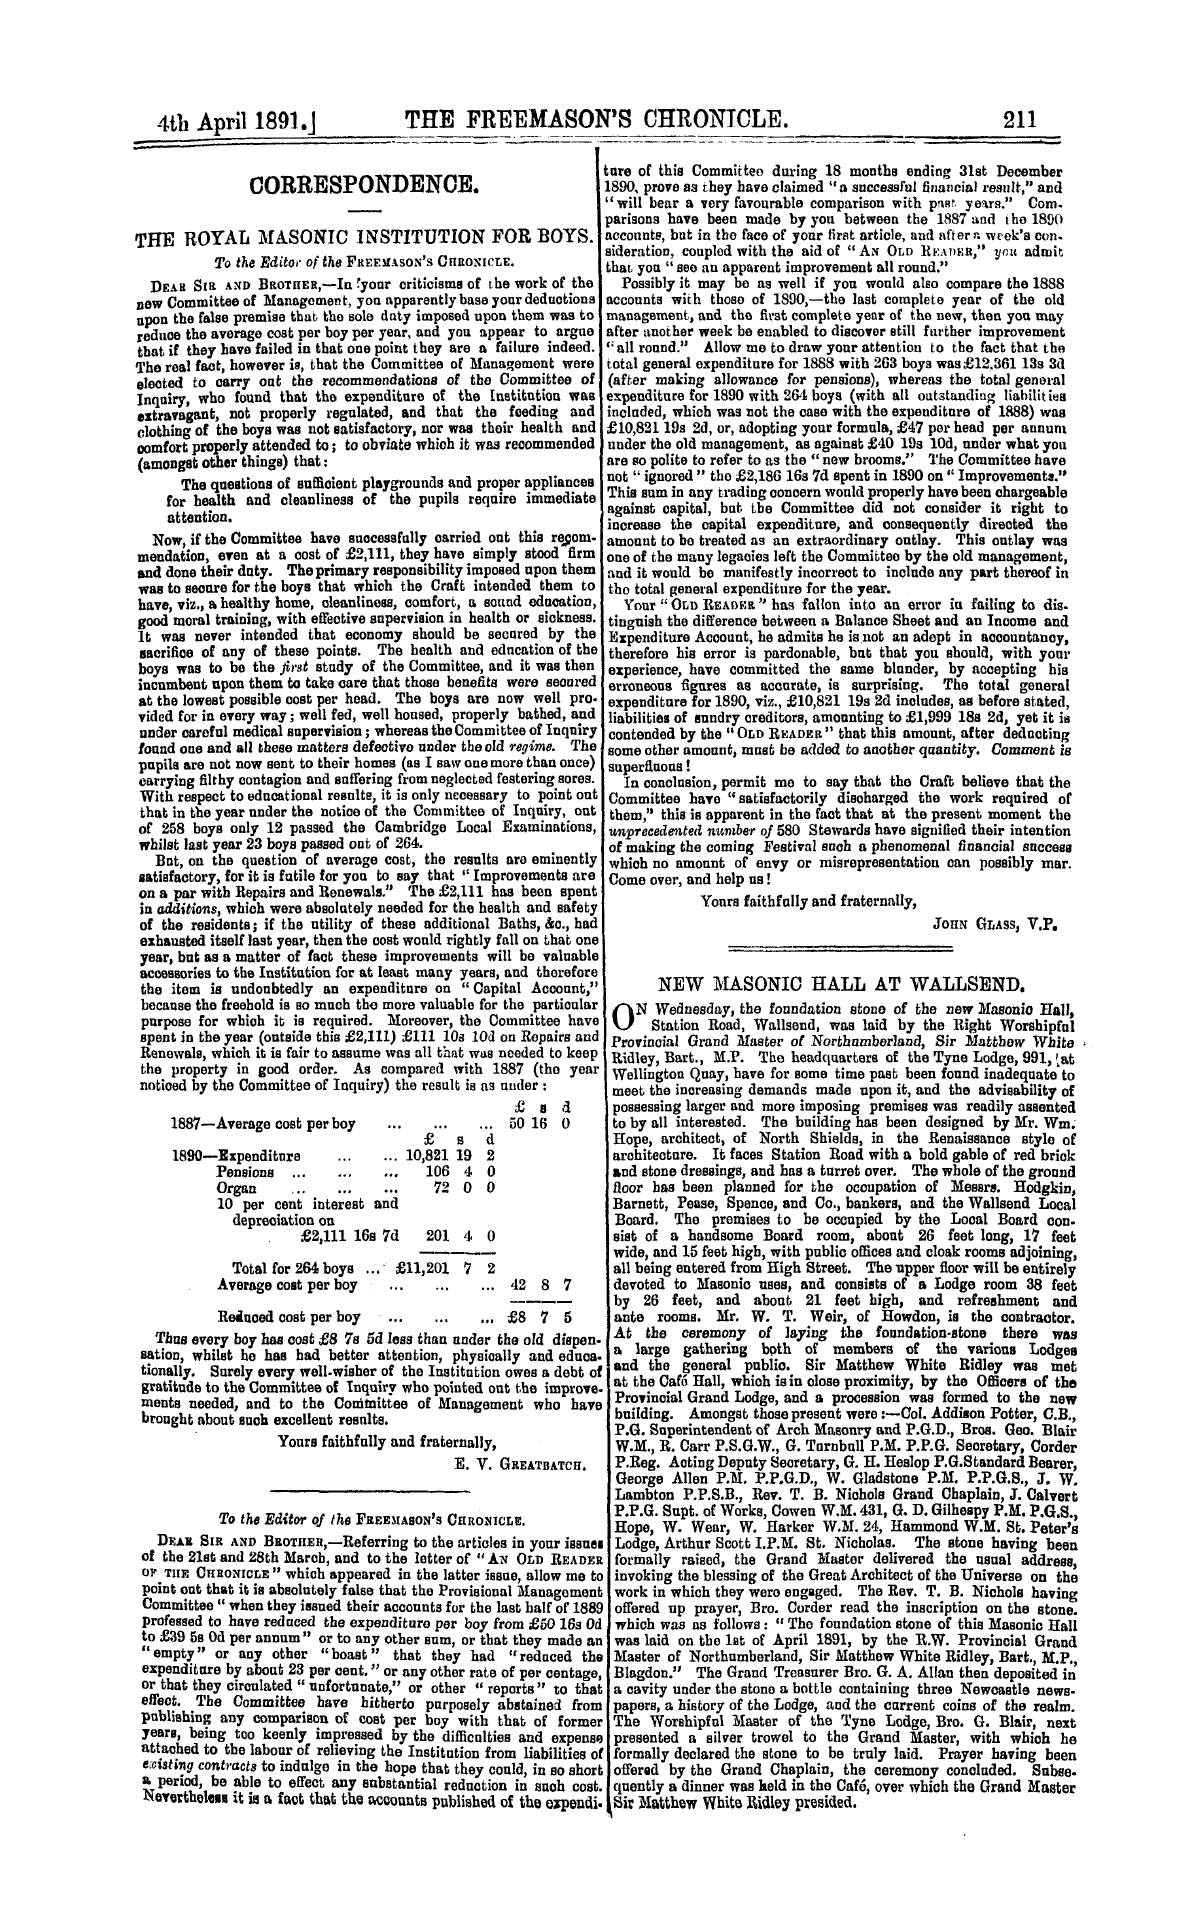 The Freemason's Chronicle: 1891-04-04 - Correspondence.